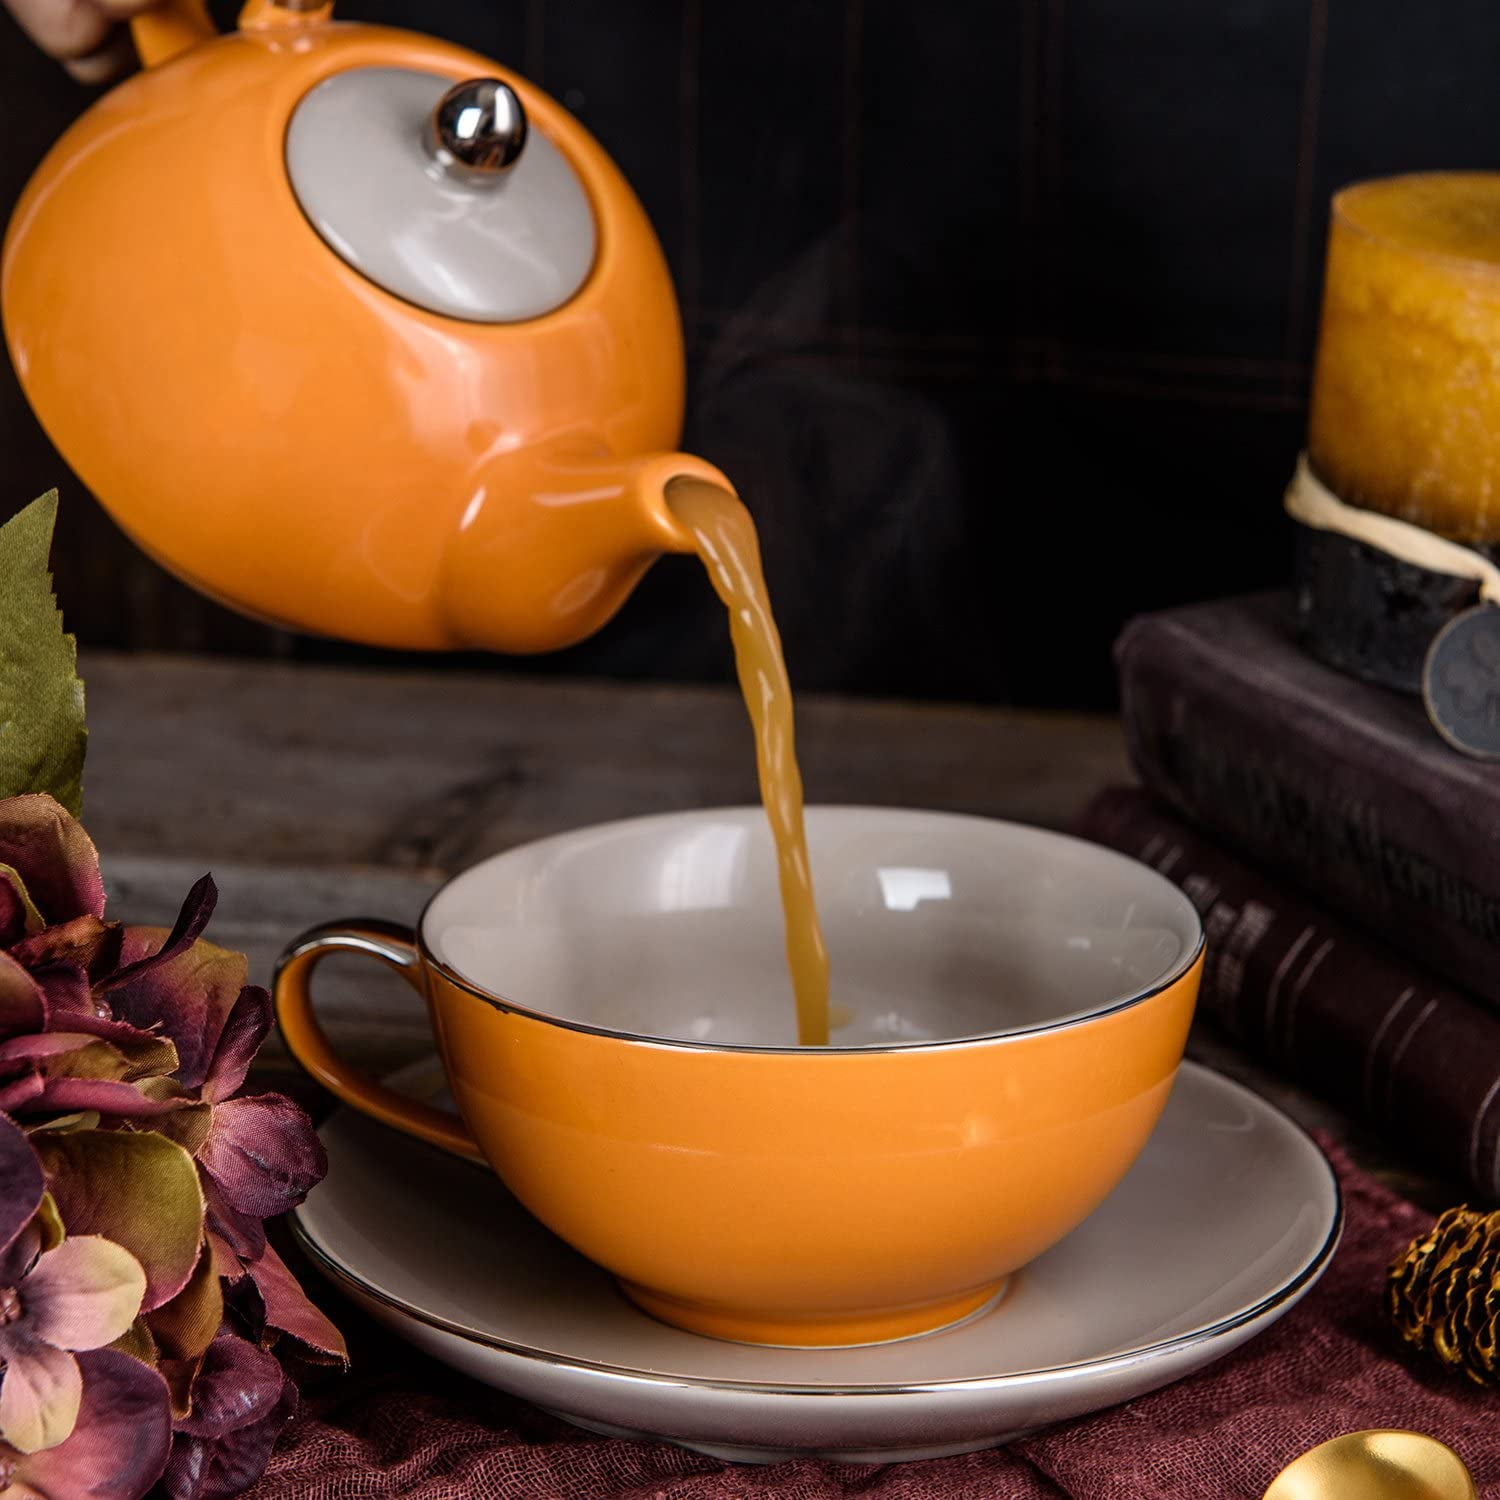 Artvigor 1-Piece Porcelain Tea Pot Light Green Teapot Teacup and